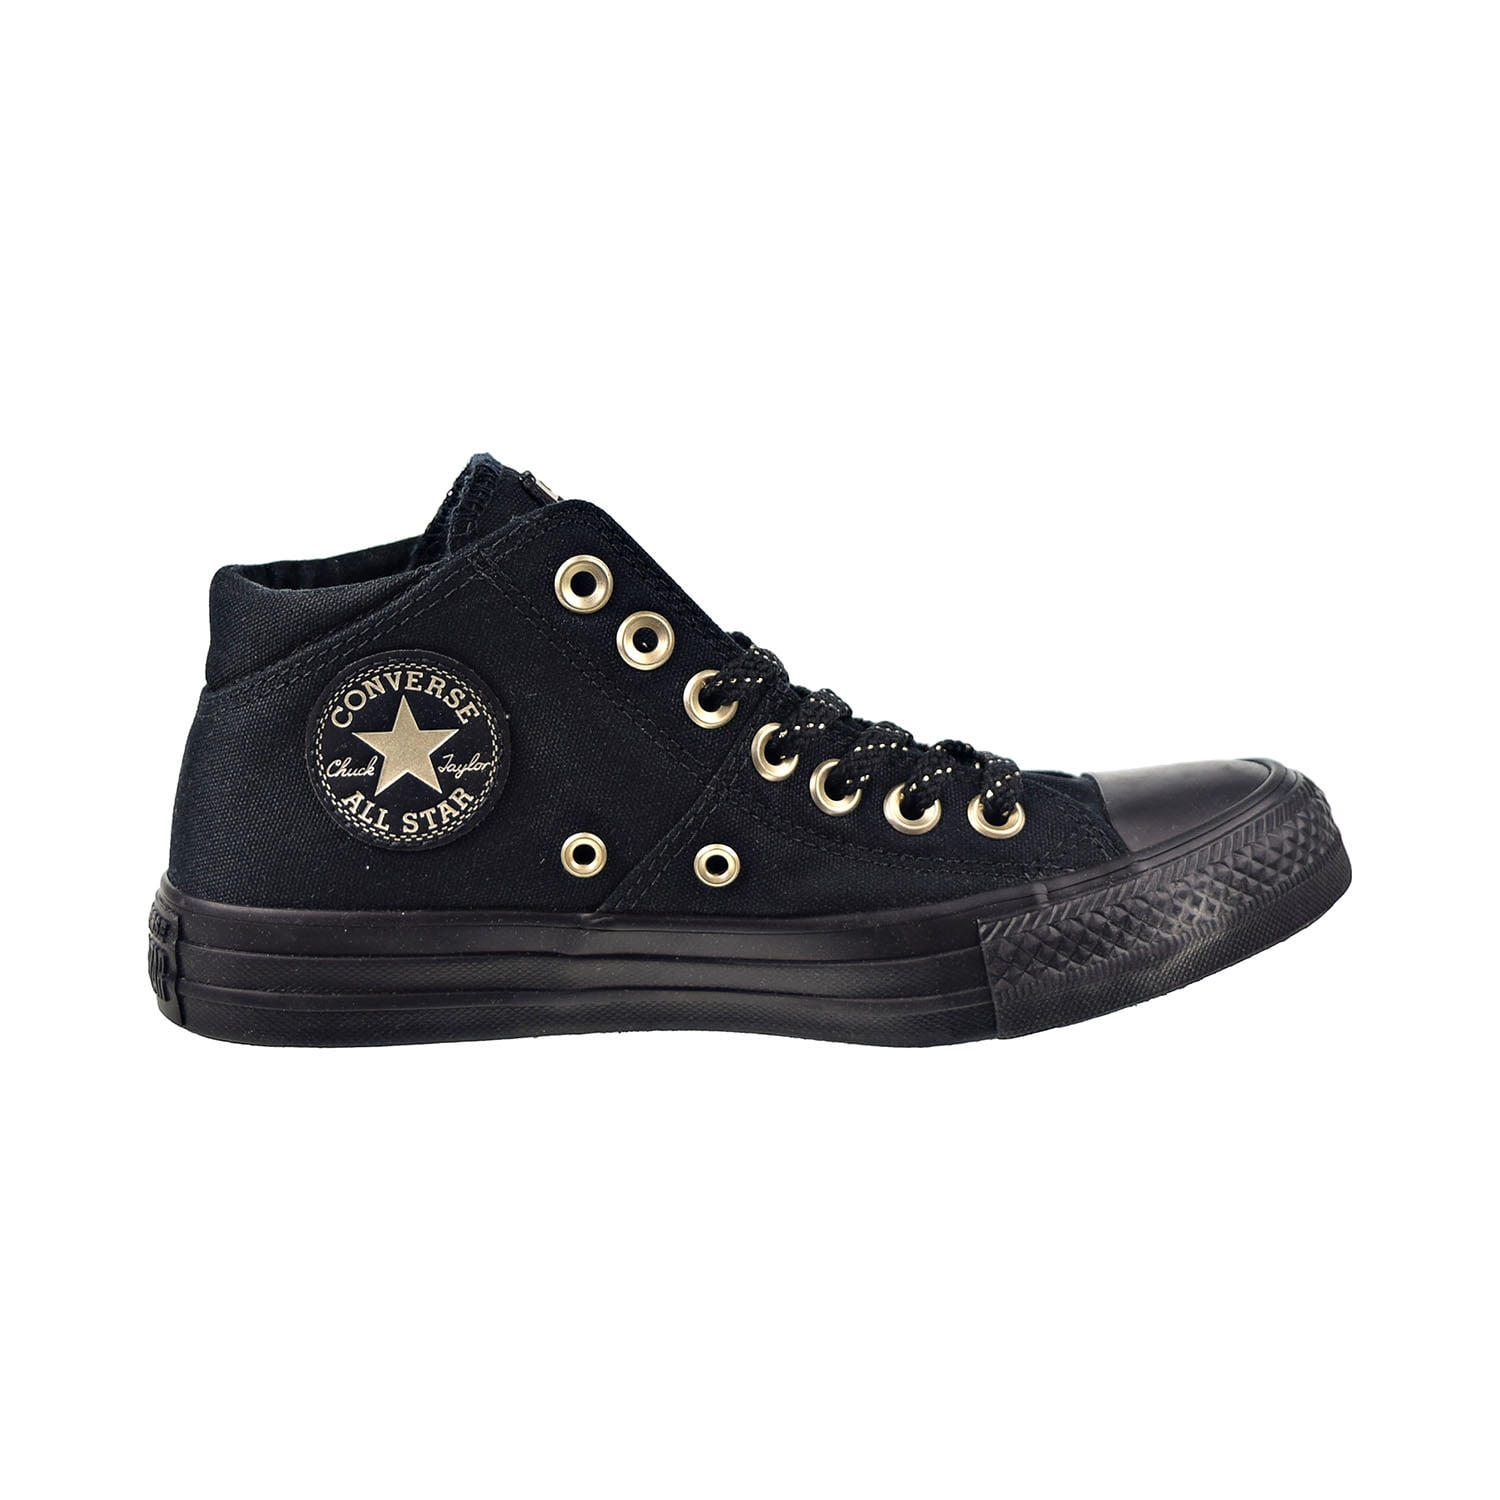 Converse All Star Madison Mid Women's Shoes Black-Gold 565228f Walmart.com